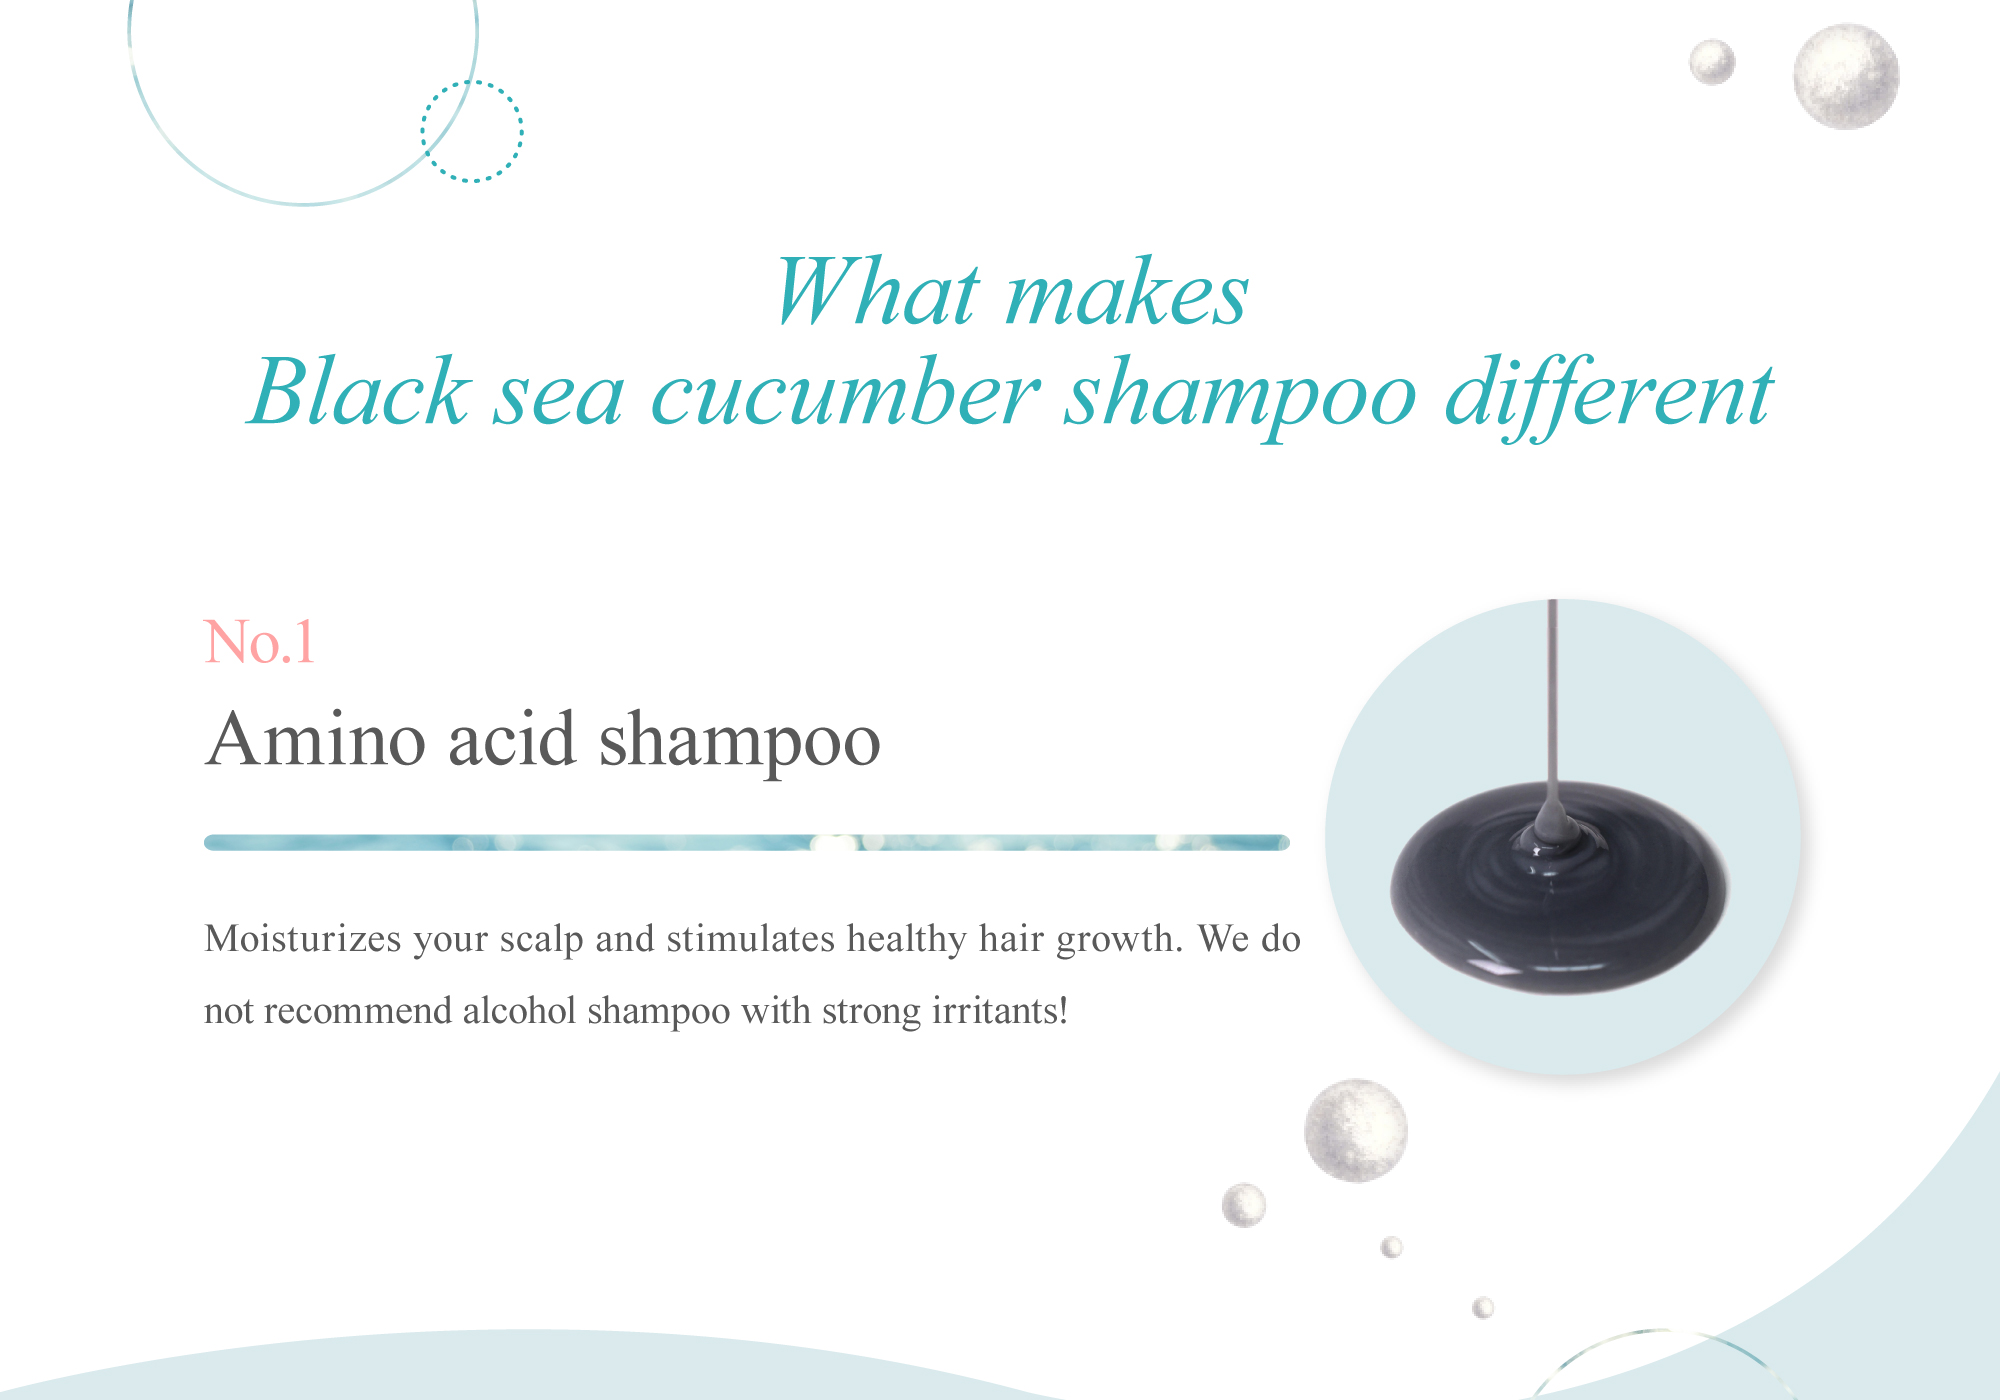 Black sea cucumber shampoo is Amino acid shampoo